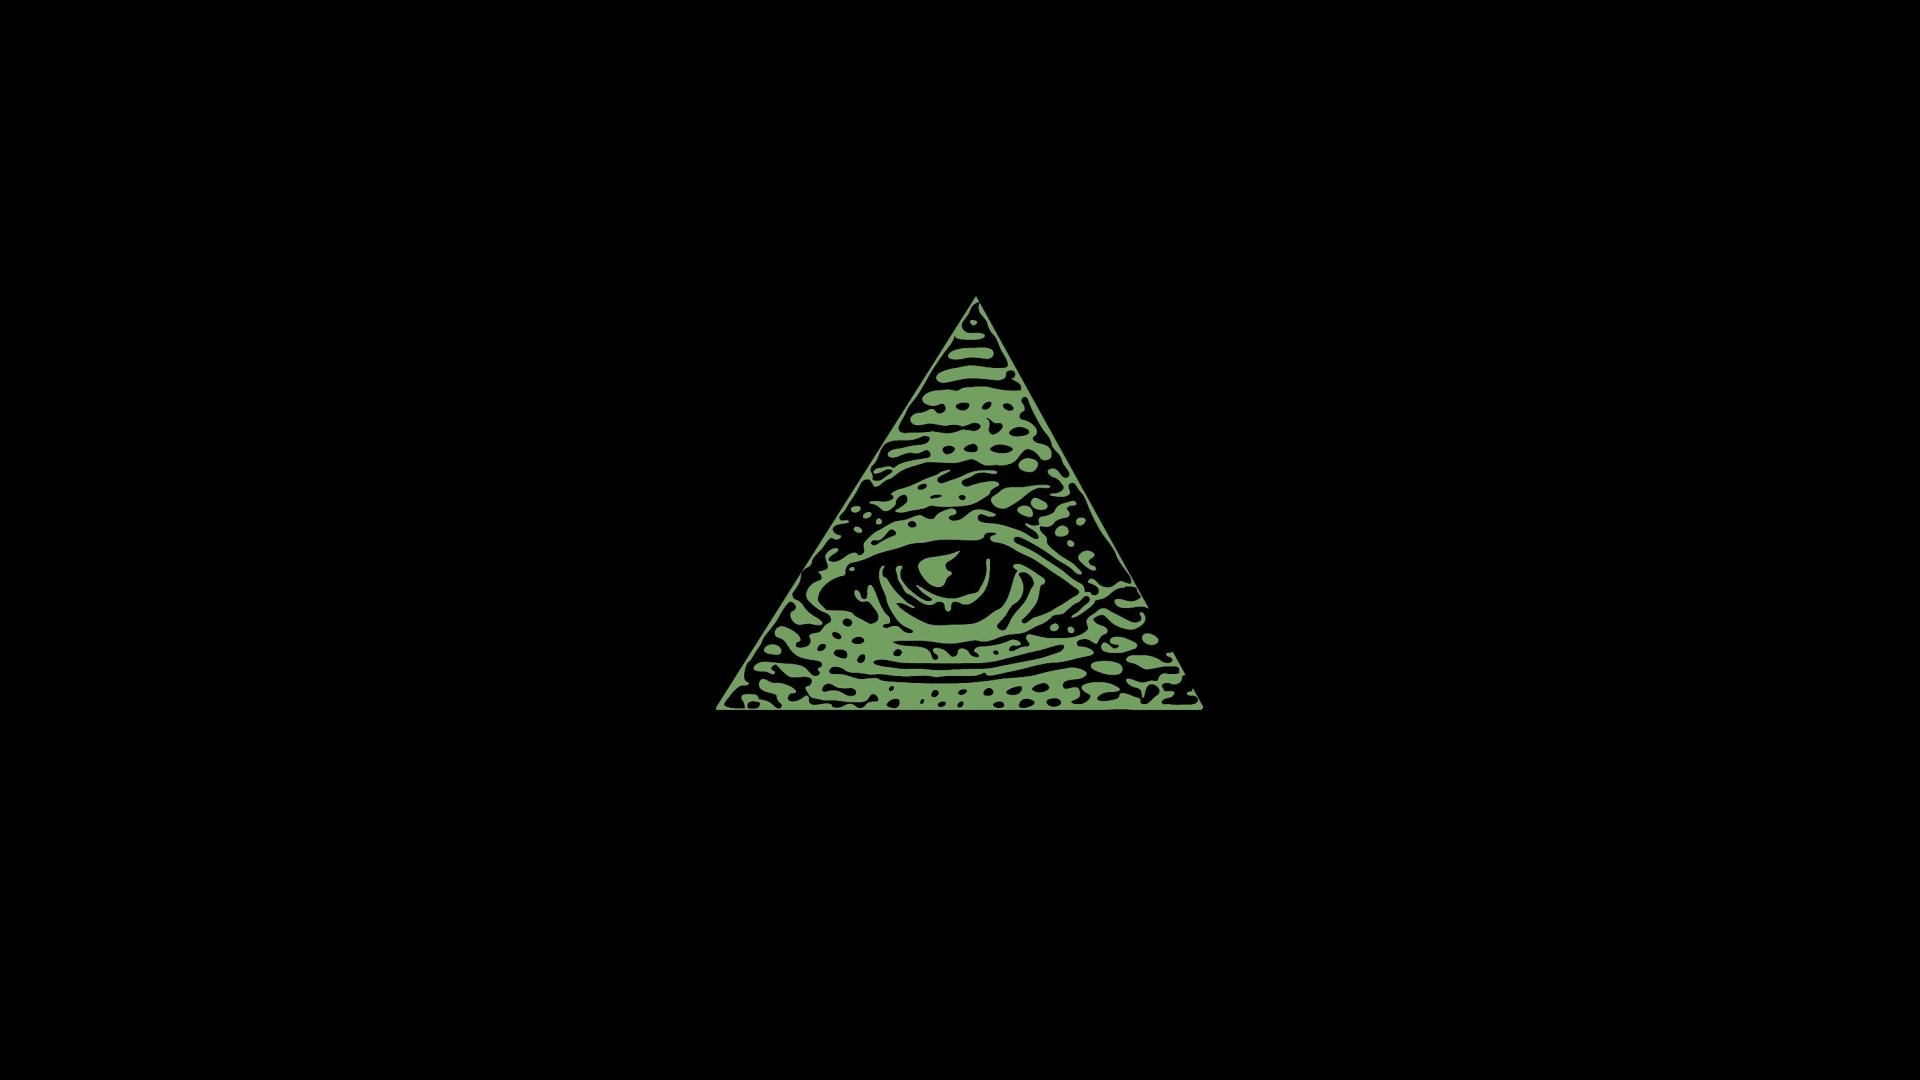 Trippy Illuminati Wallpaper Image